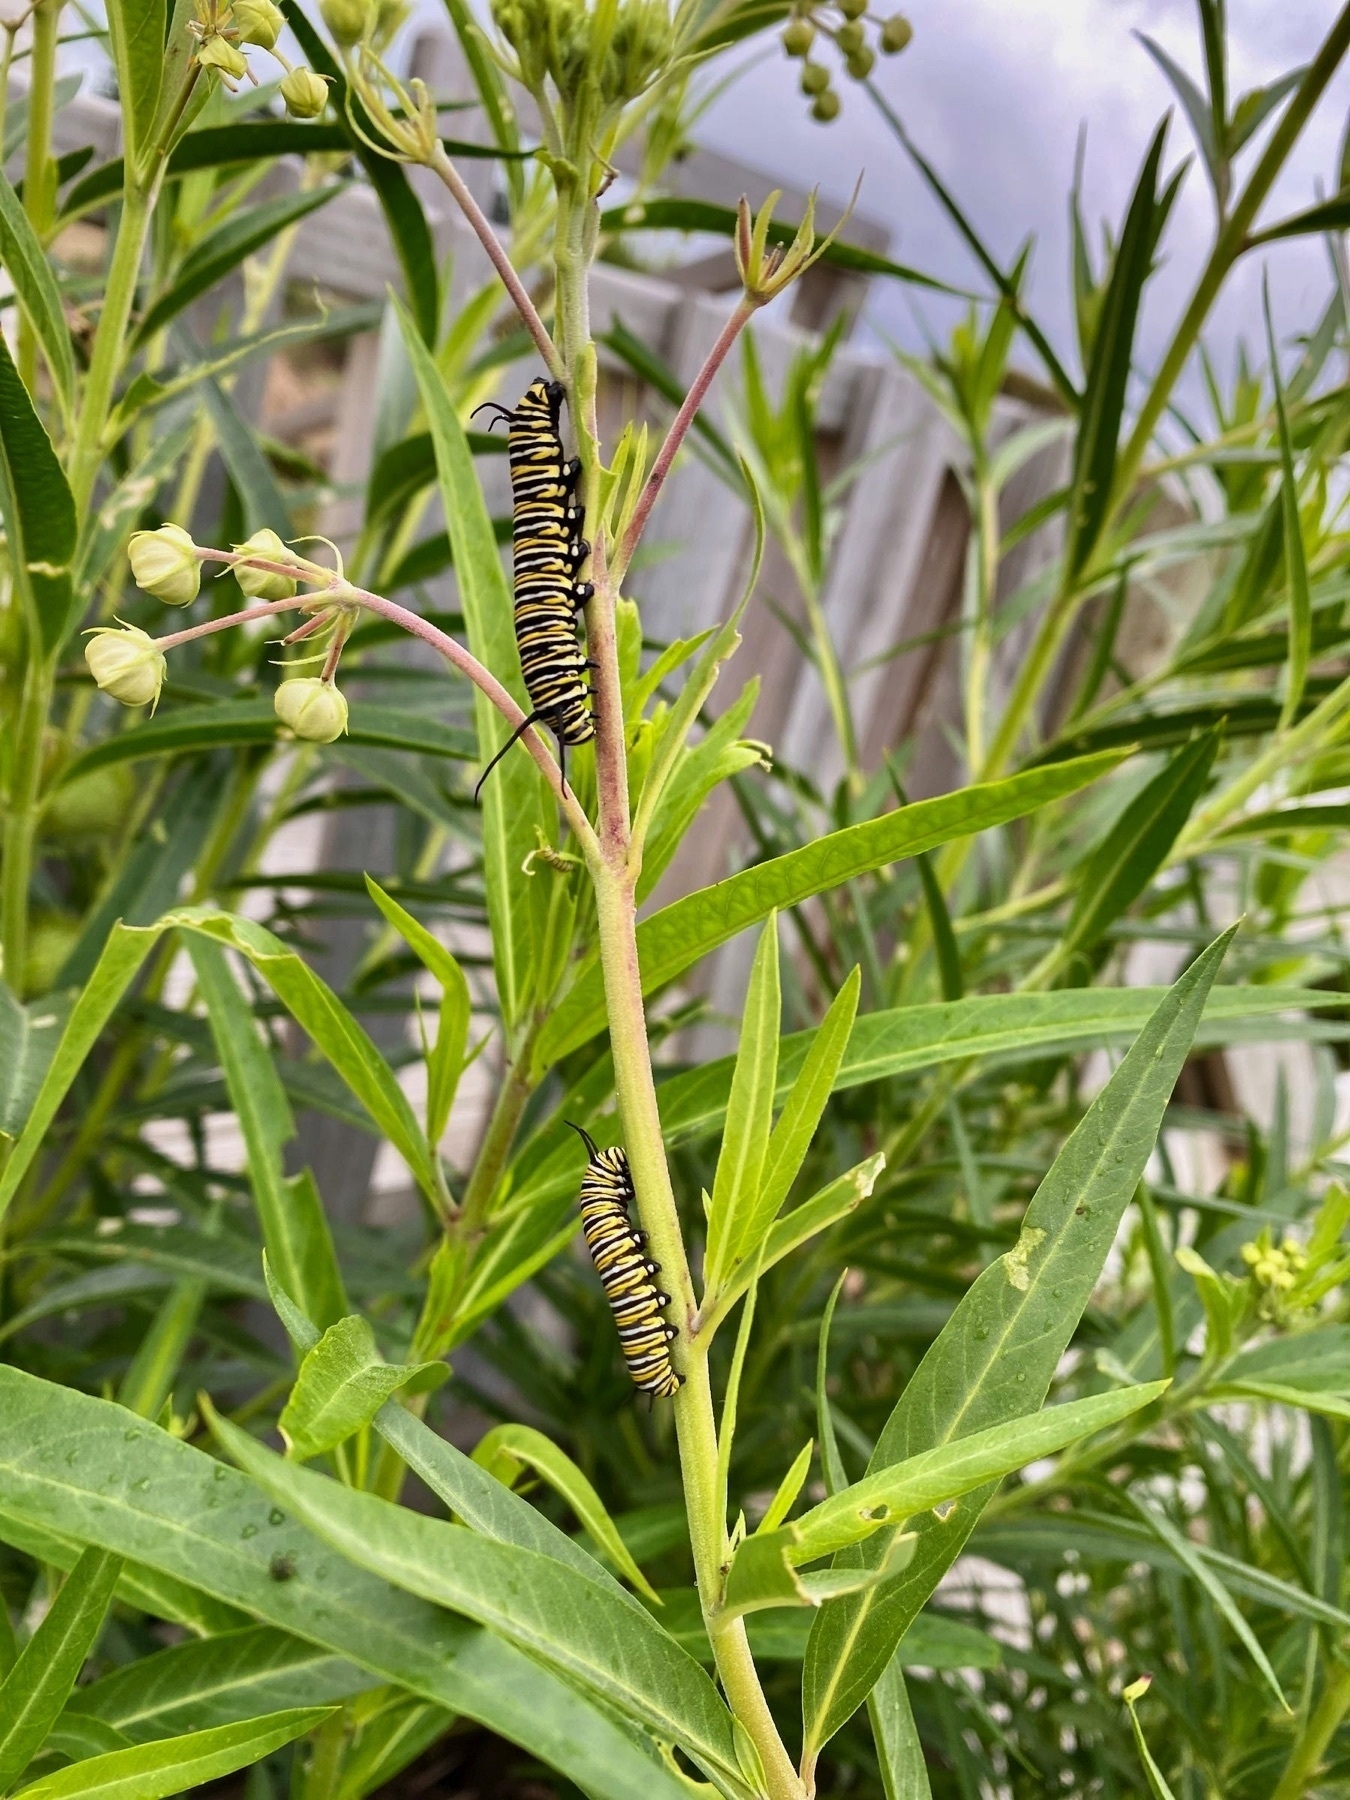 Caterpillars on plant stems. 